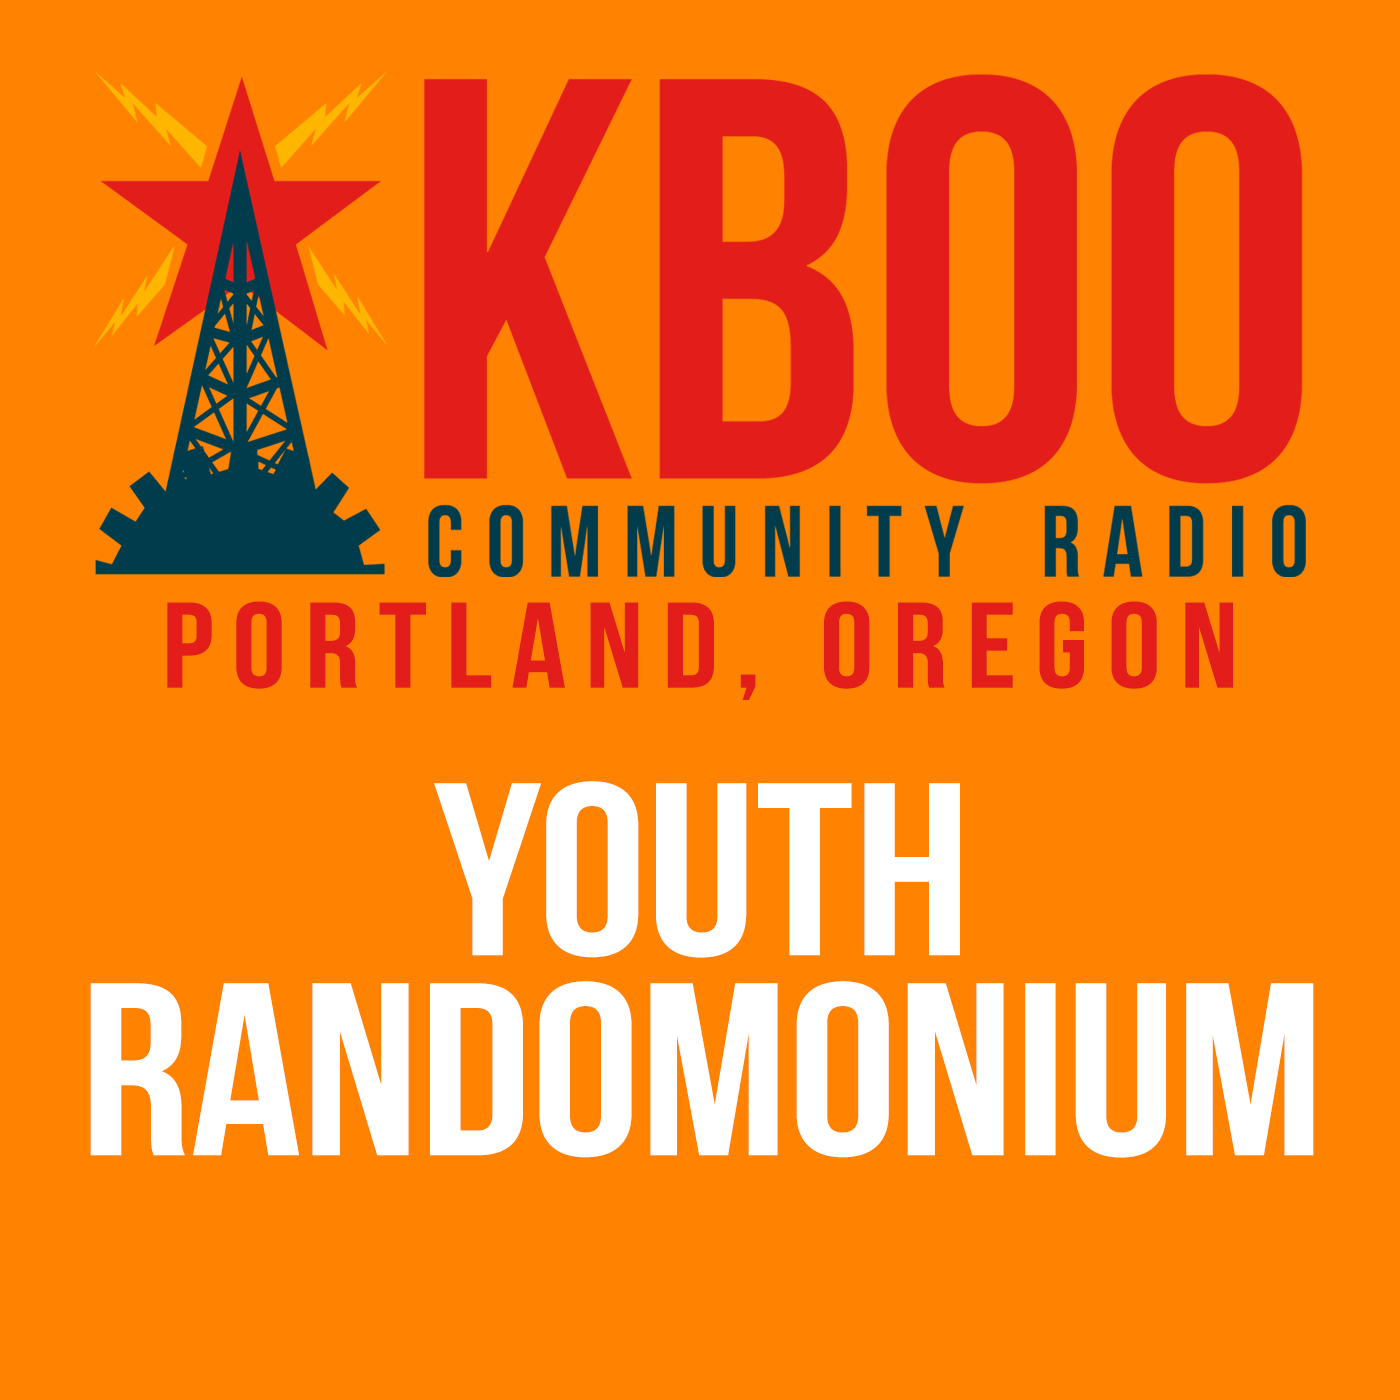 Youth Randomonium on 11/17/23